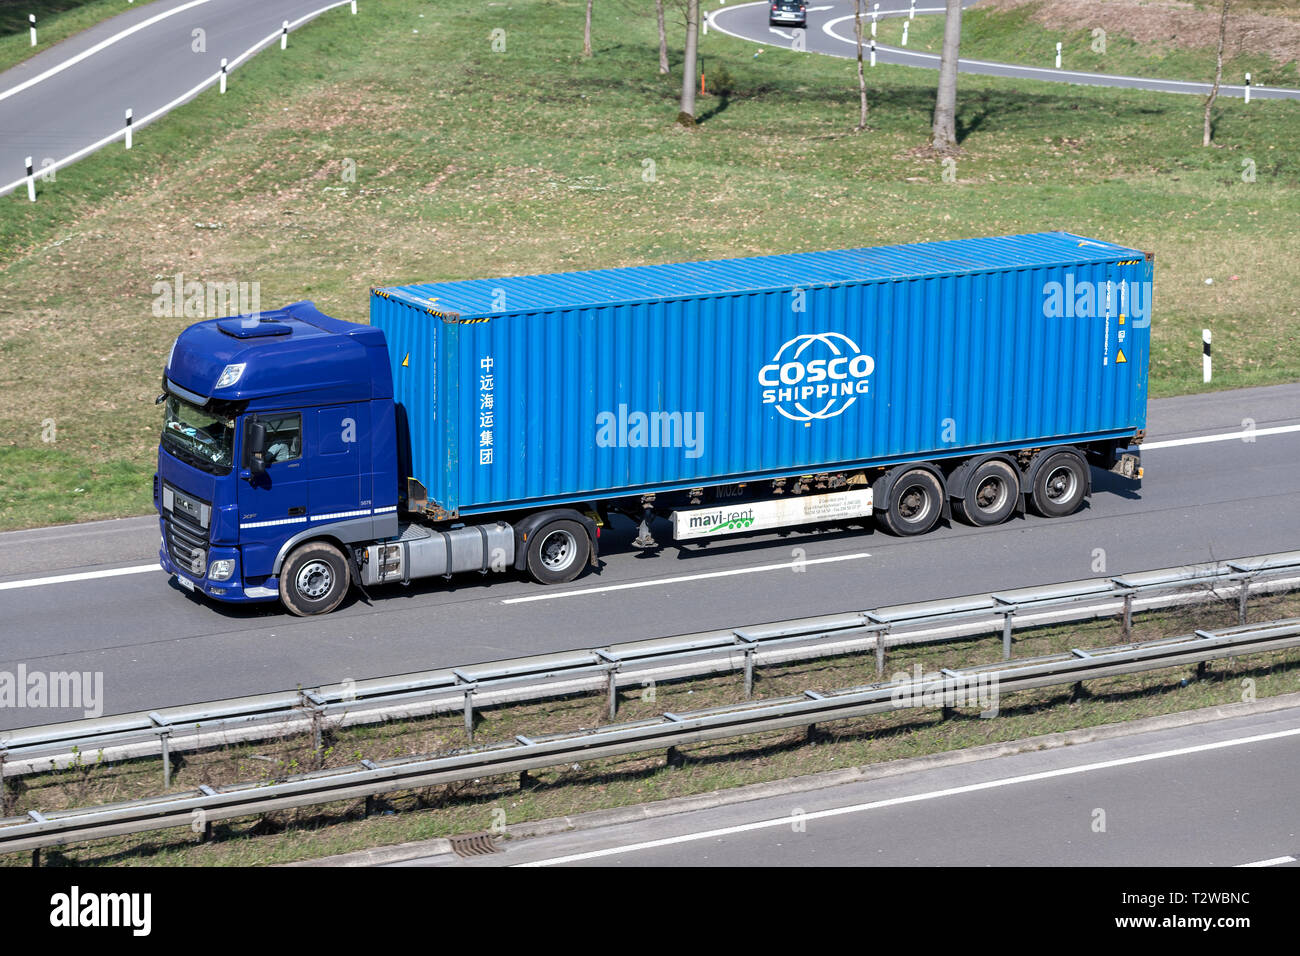 Carrello con COSCO Container su autostrada tedesca. Foto Stock